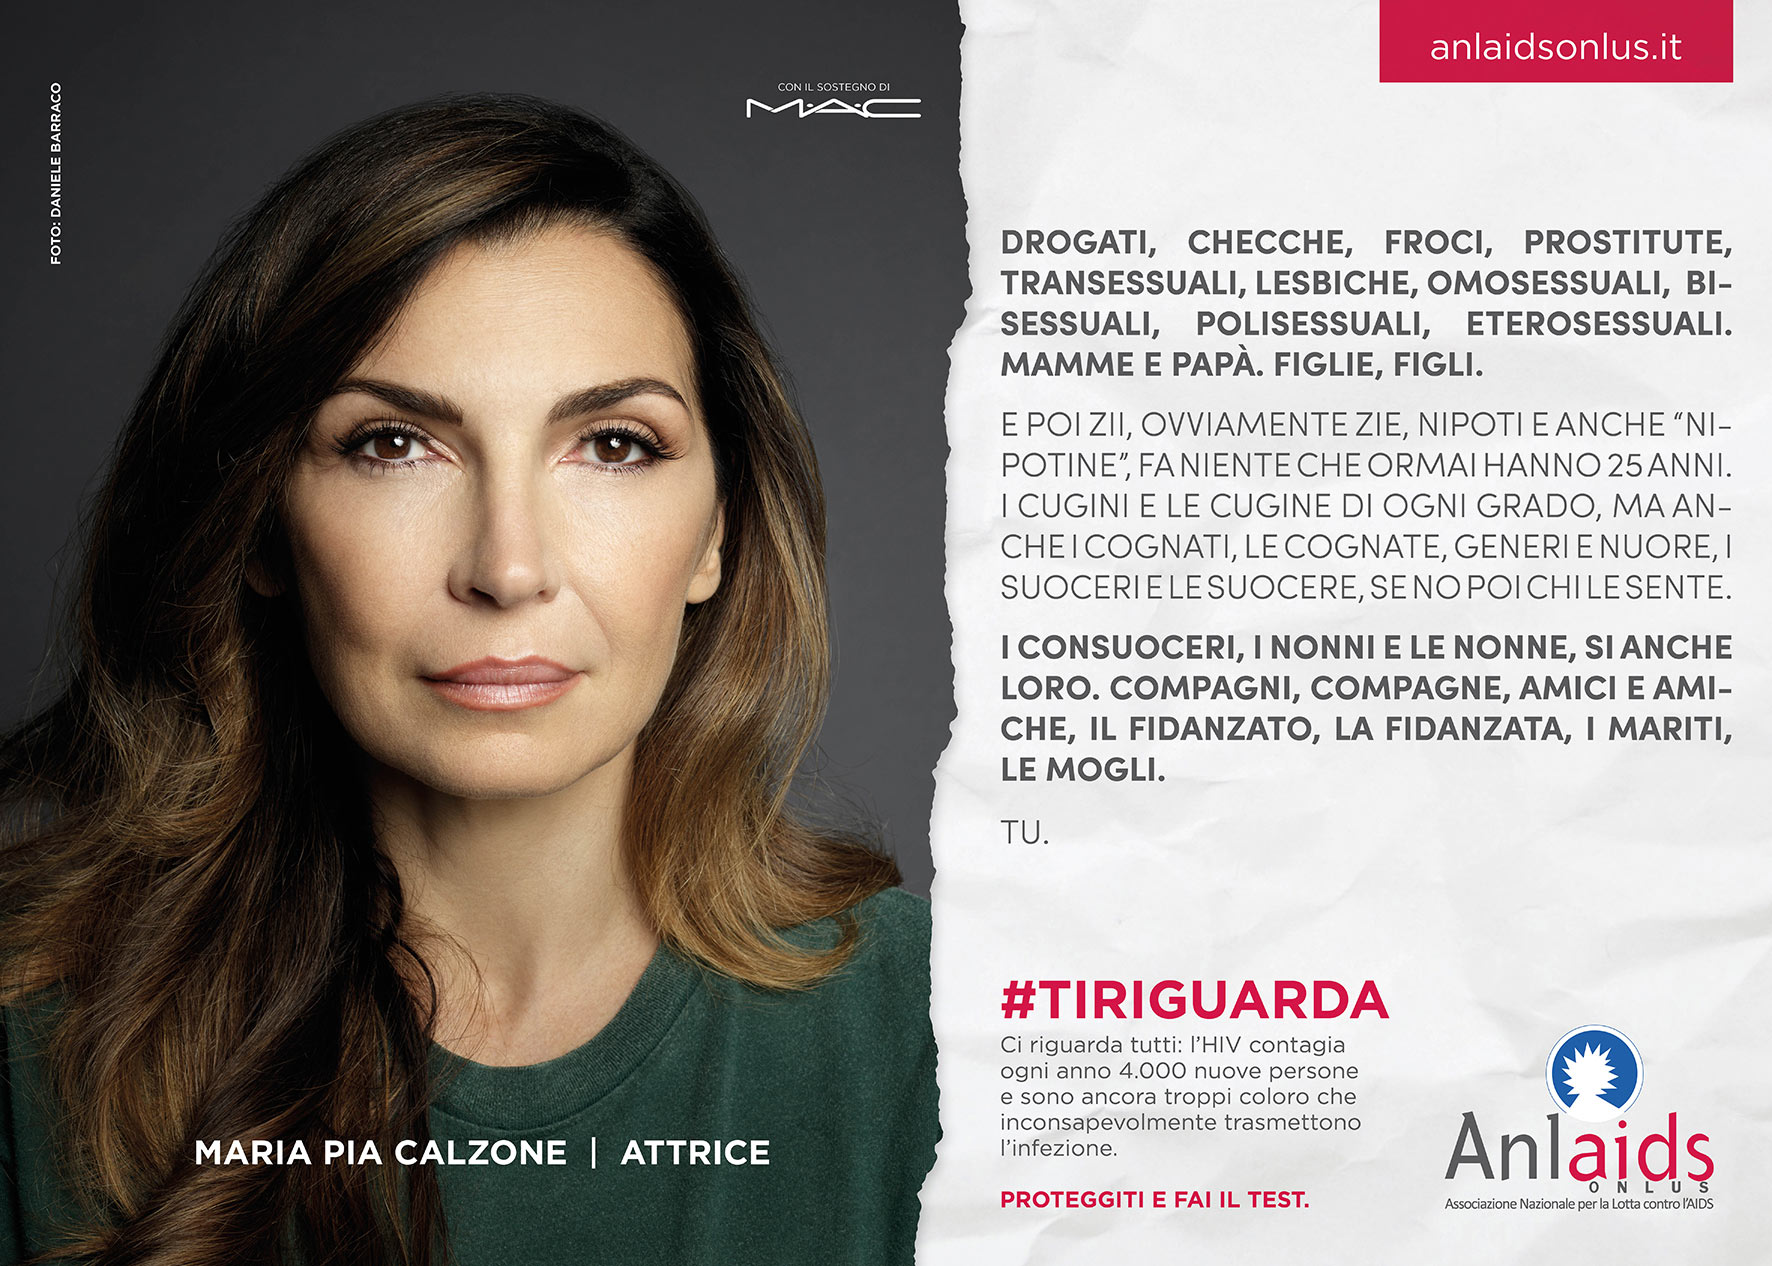 ANLAIDS campaign - Maria Pia Calzone